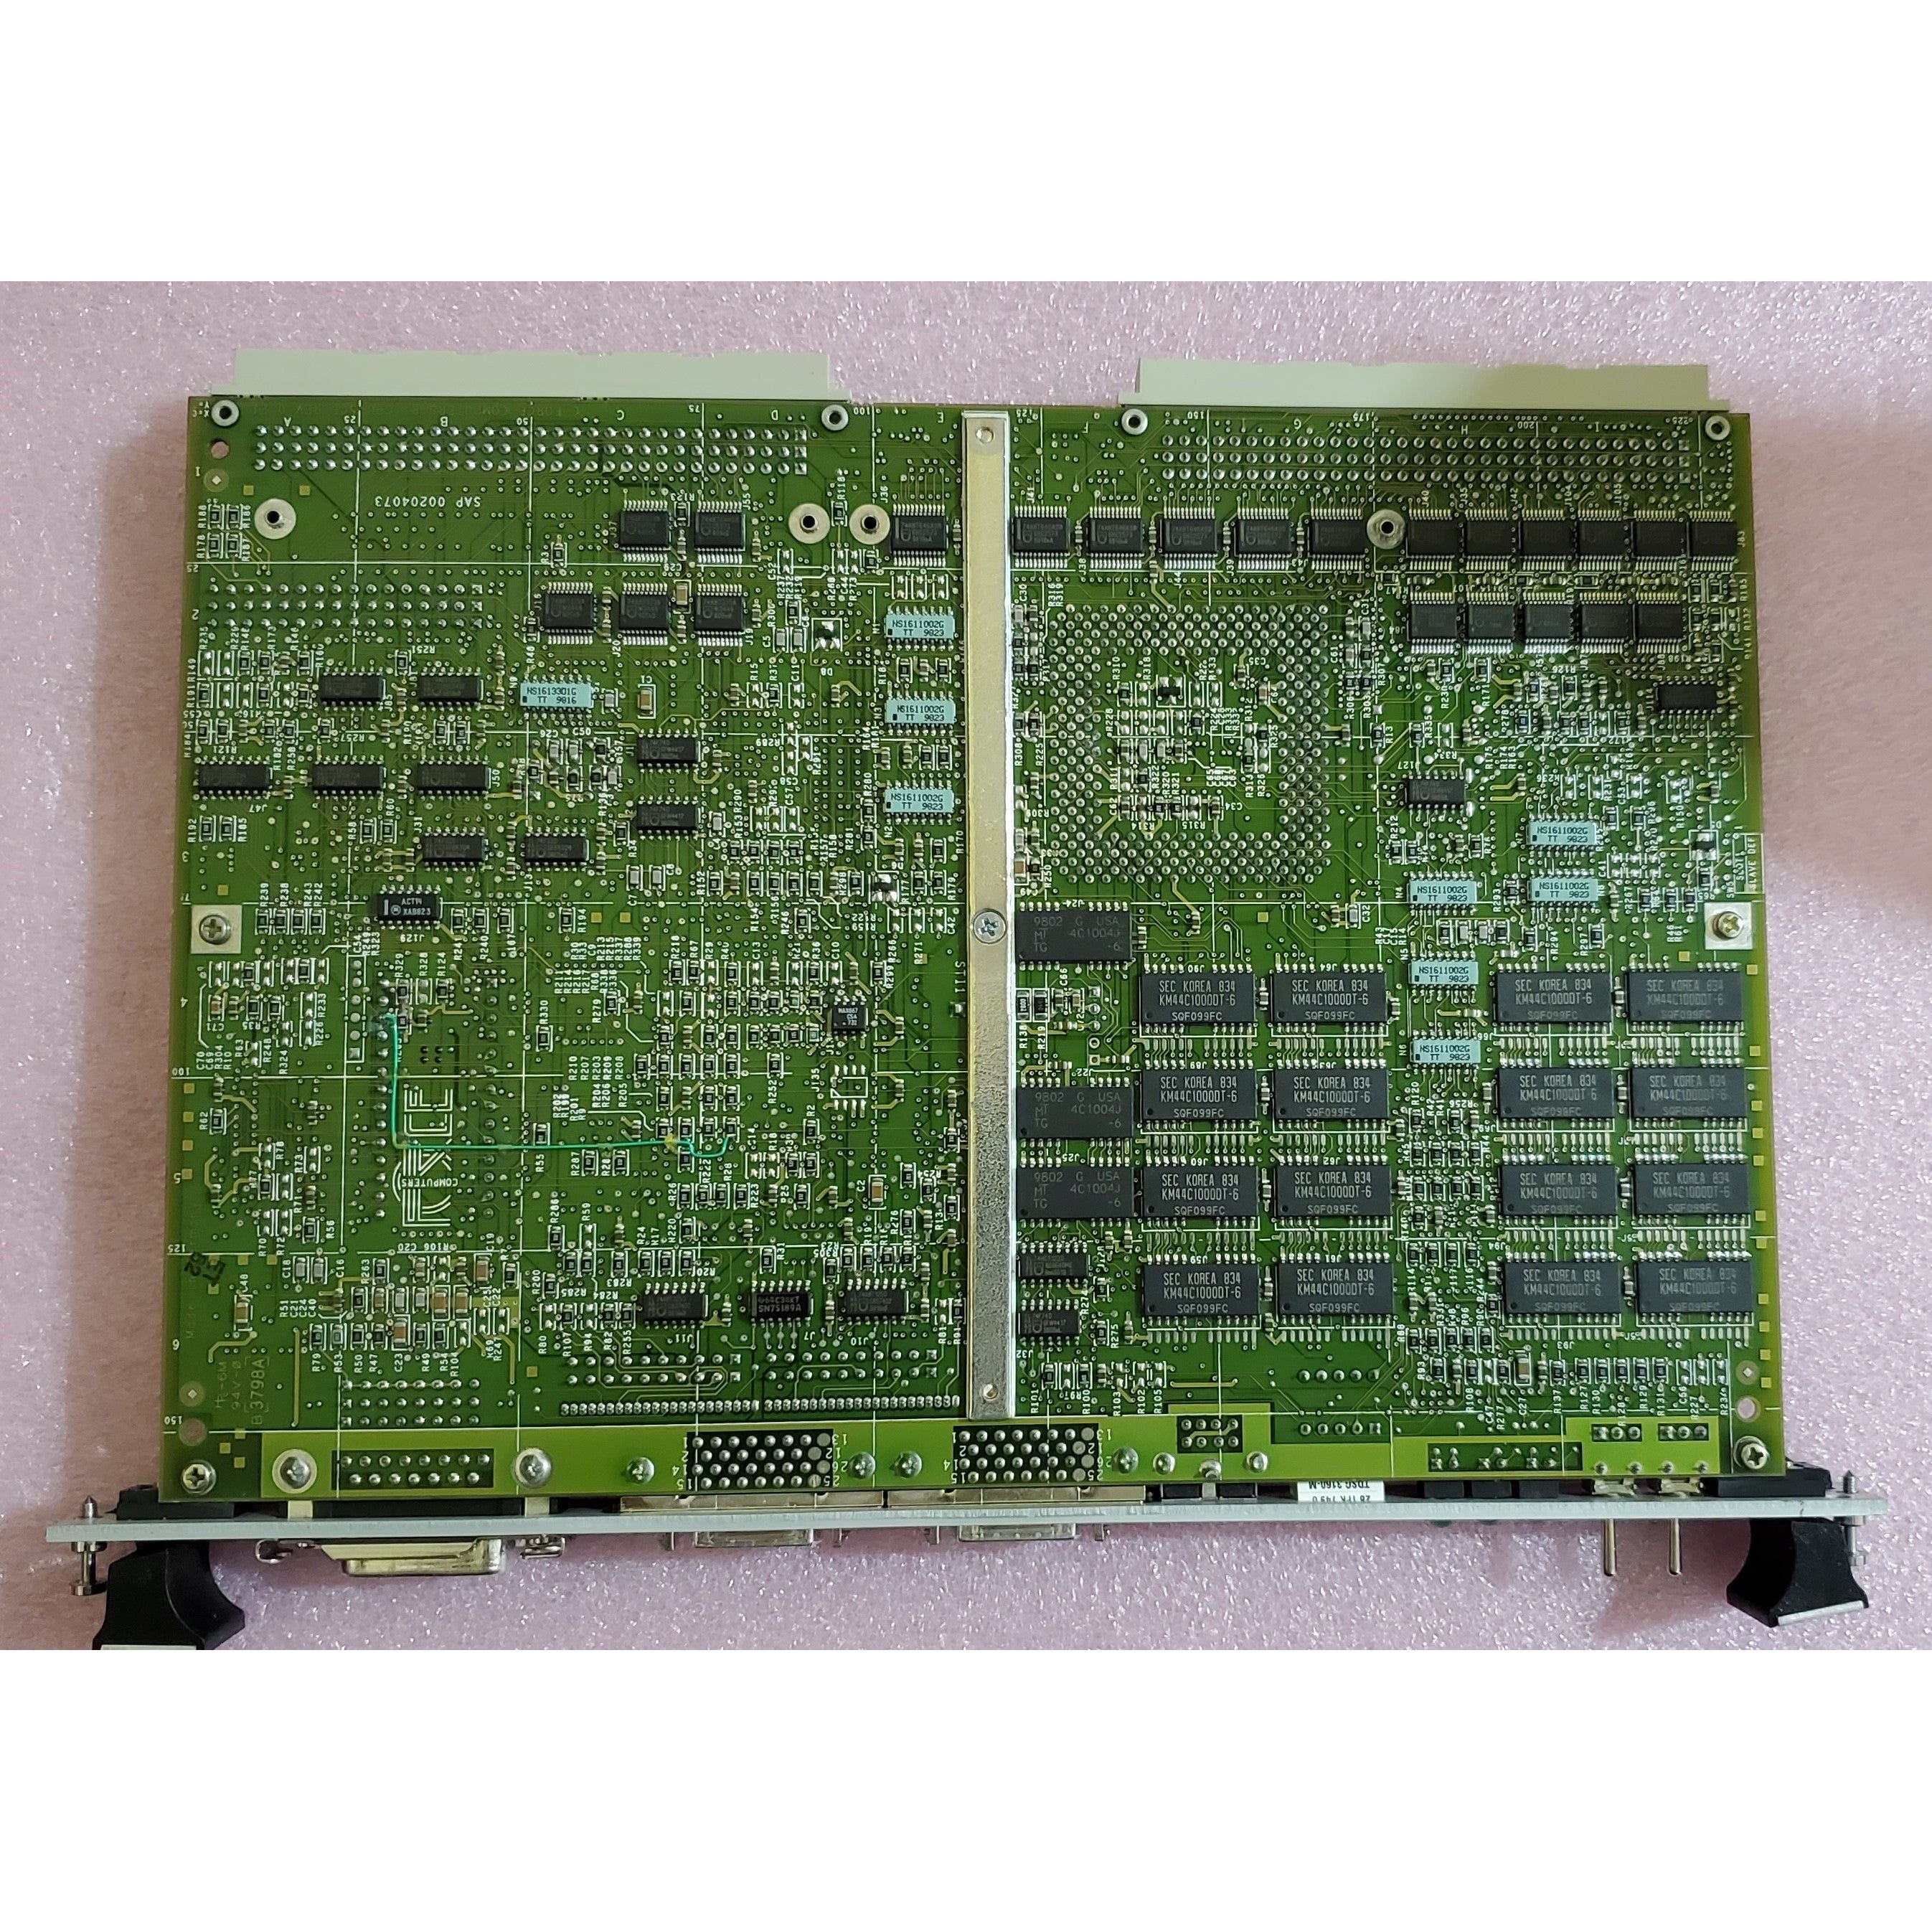 CPU-5CE/16-85-2  |  Force Computer